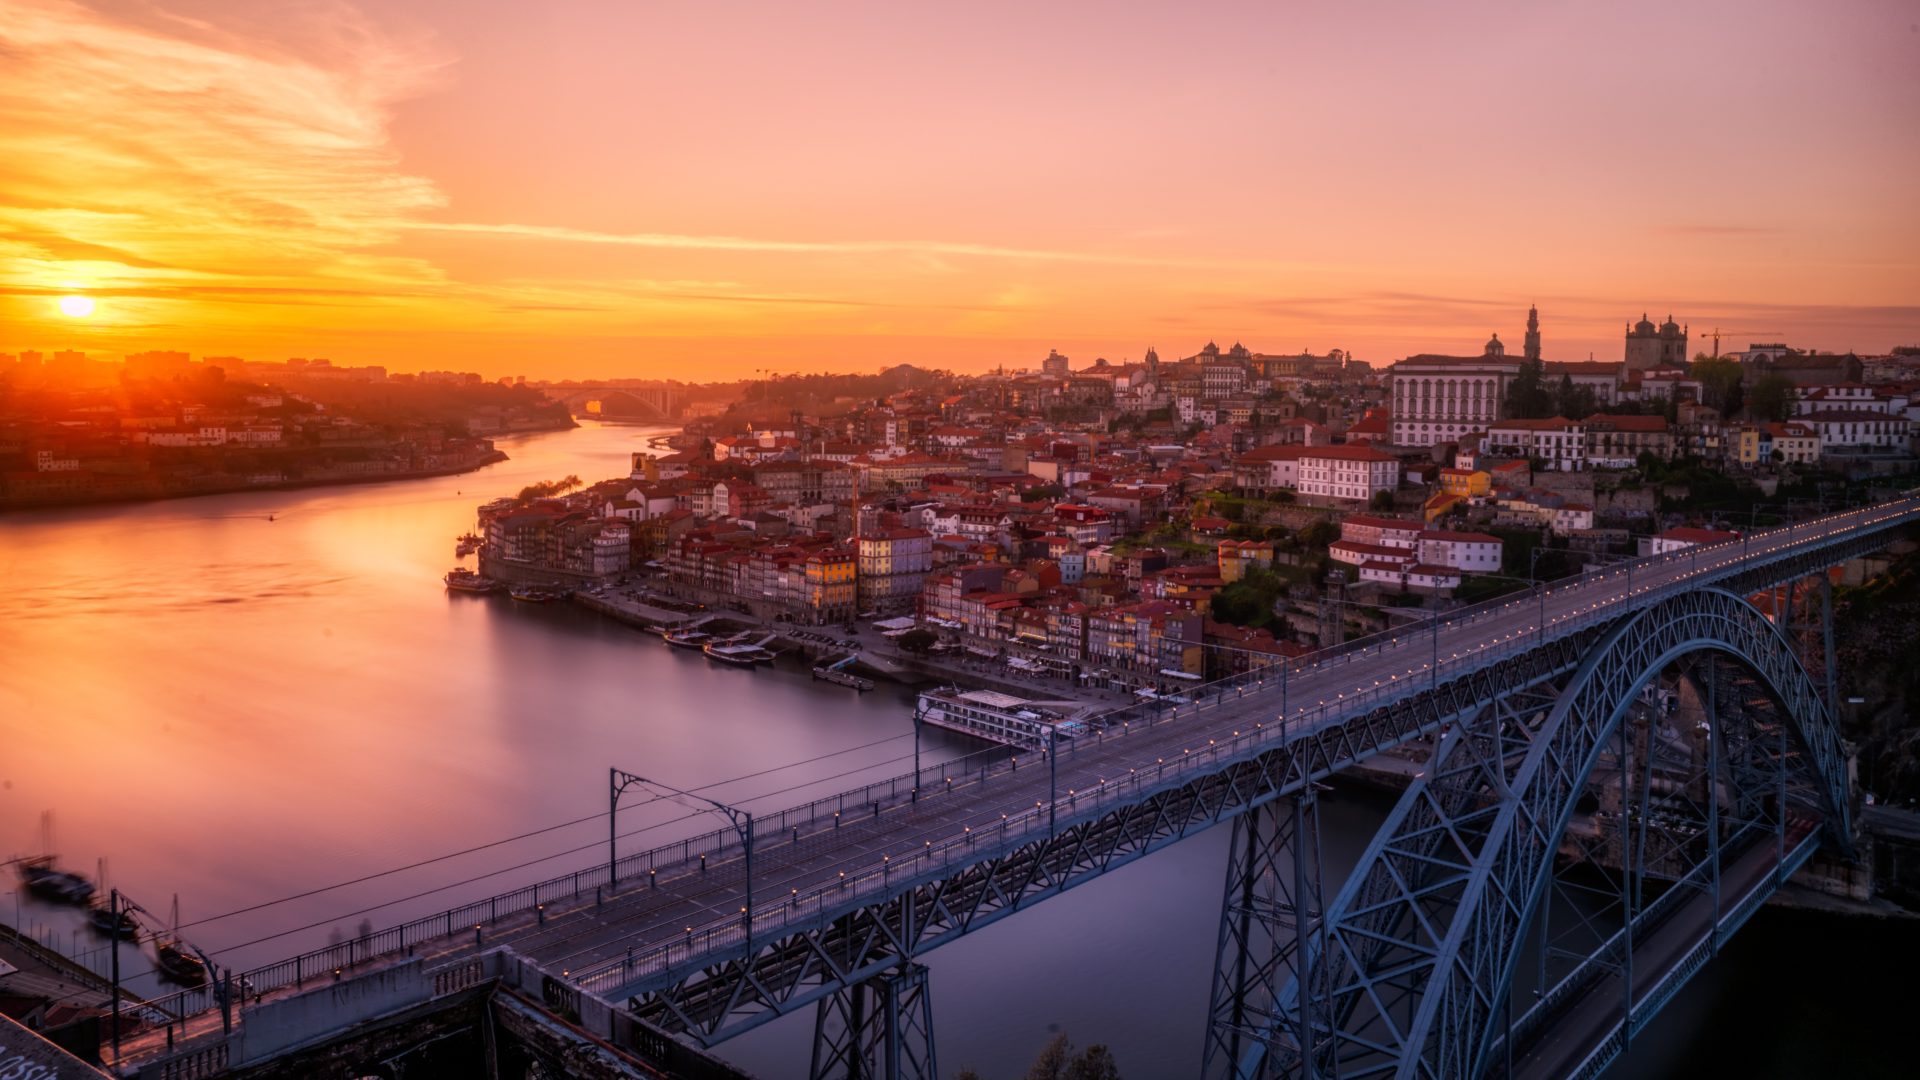 Städtetrip Porto